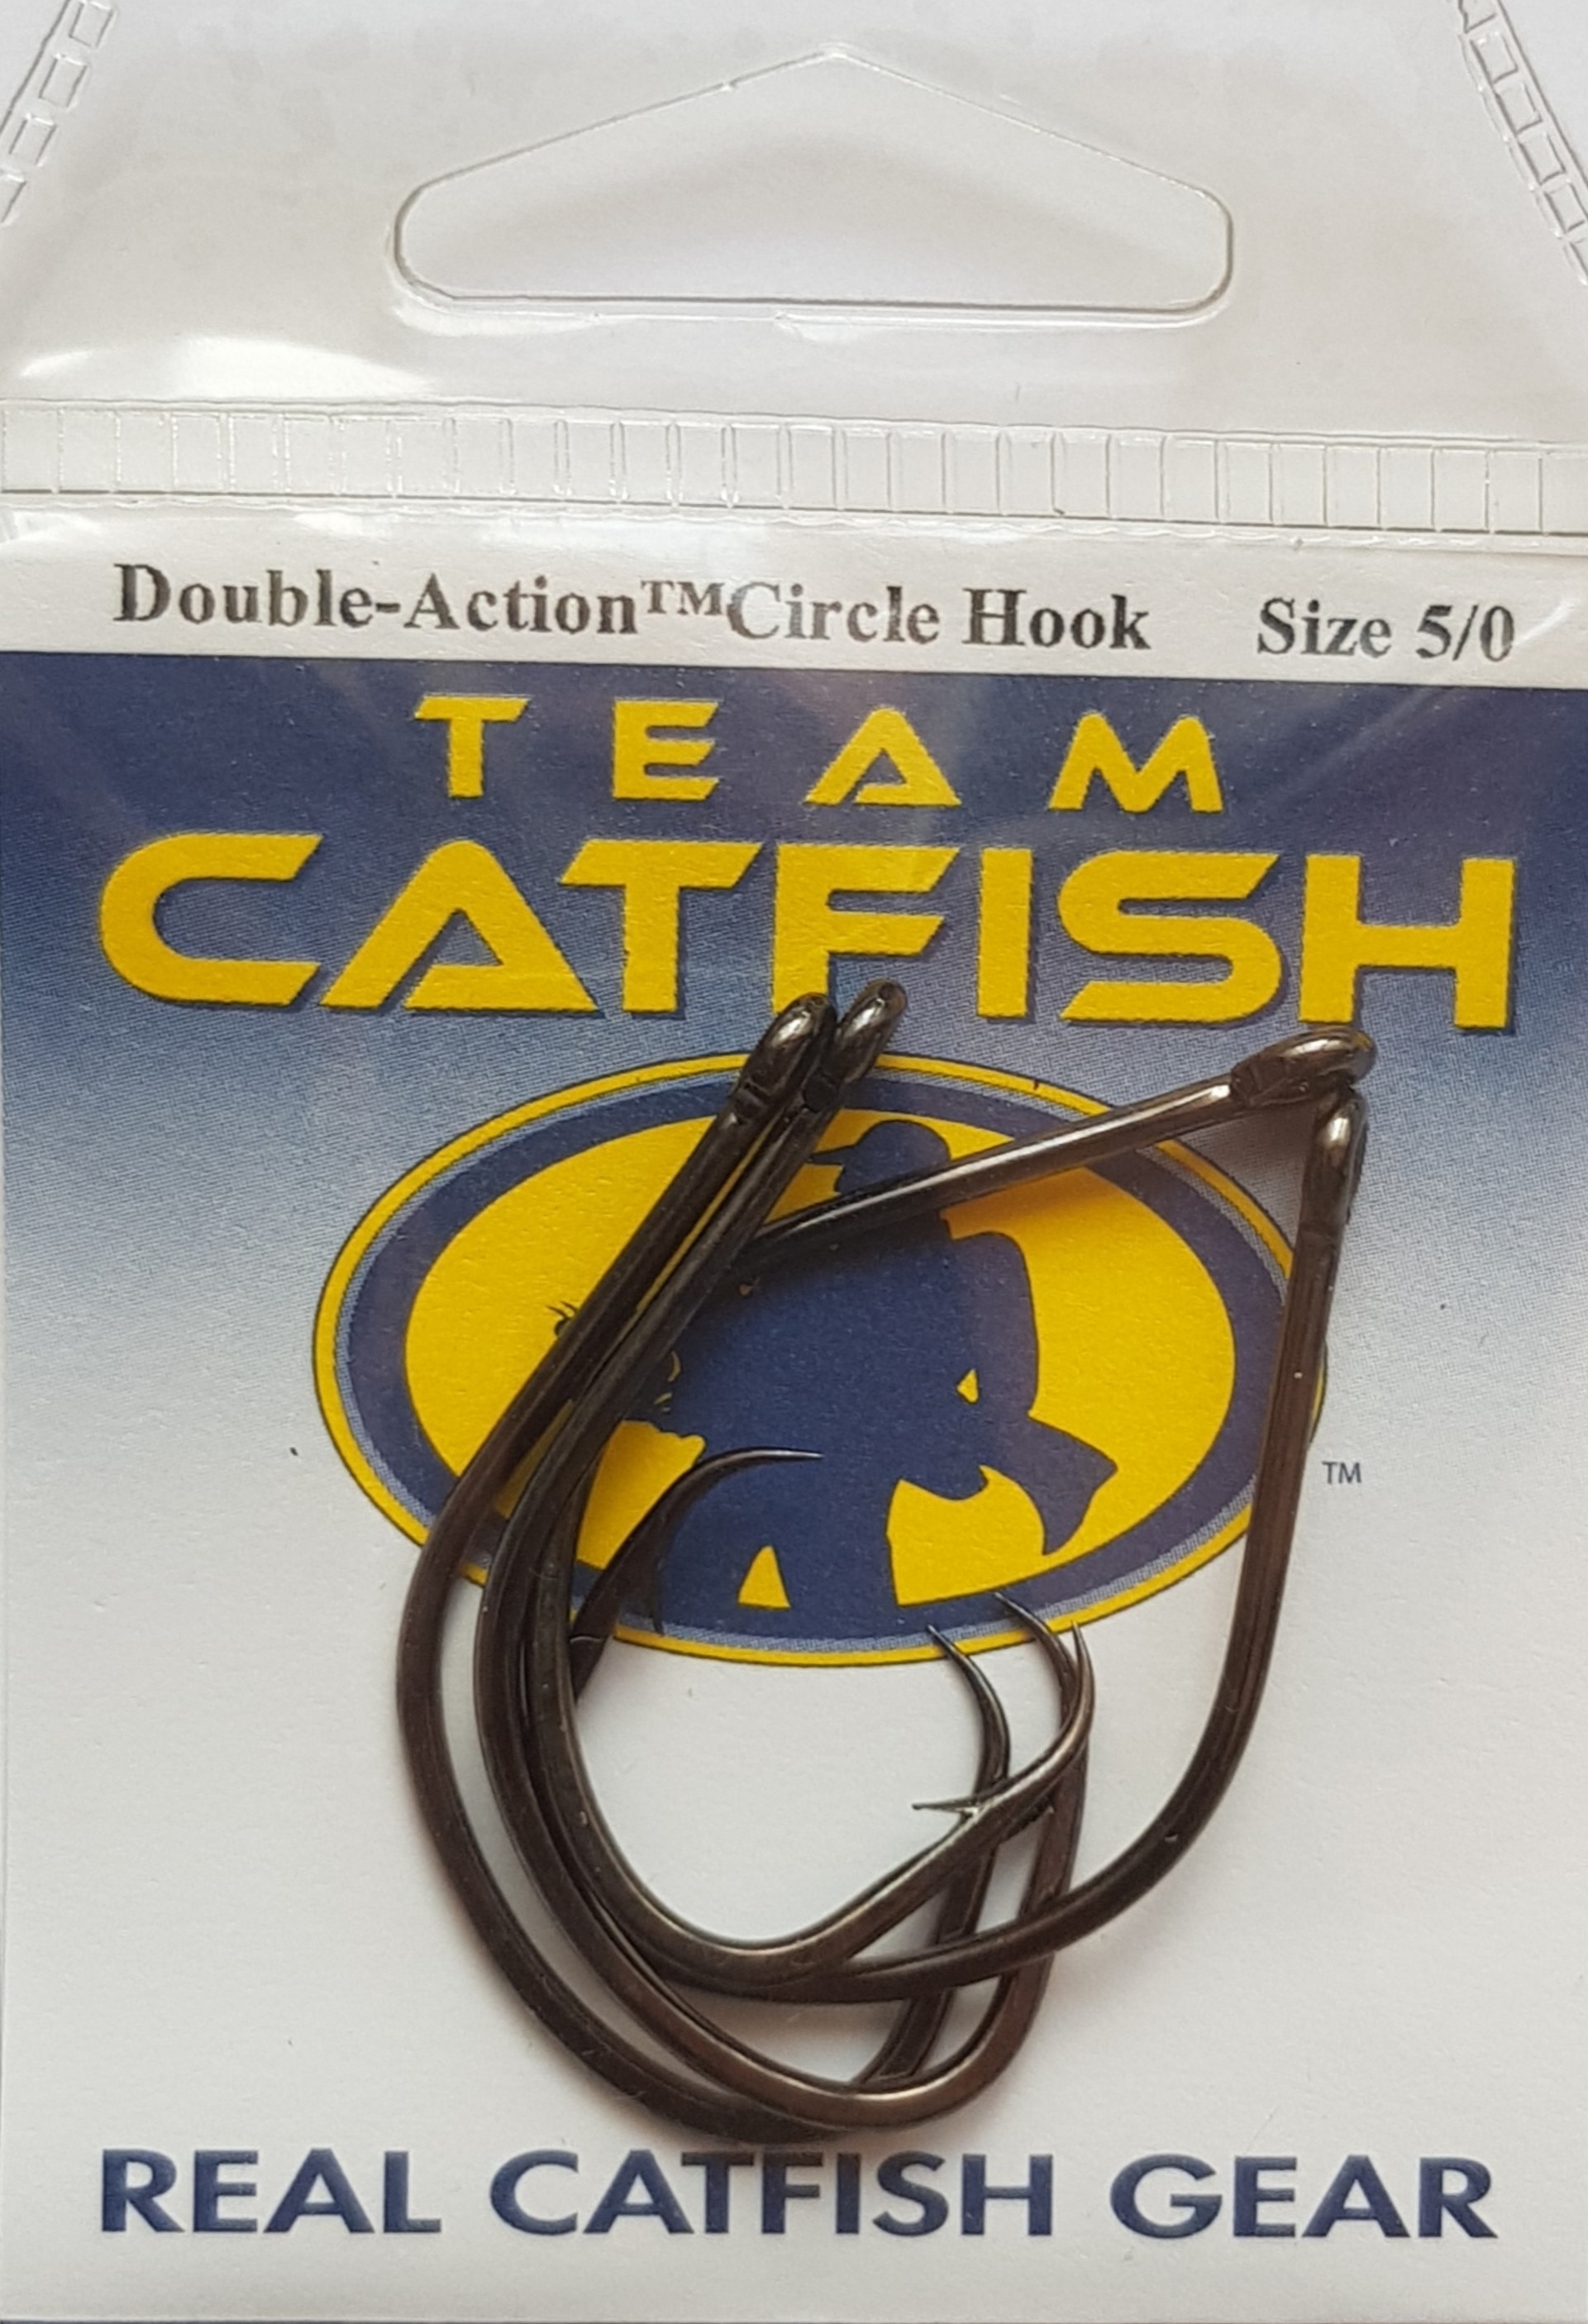 Team Catfish Double Action Hook 8/0